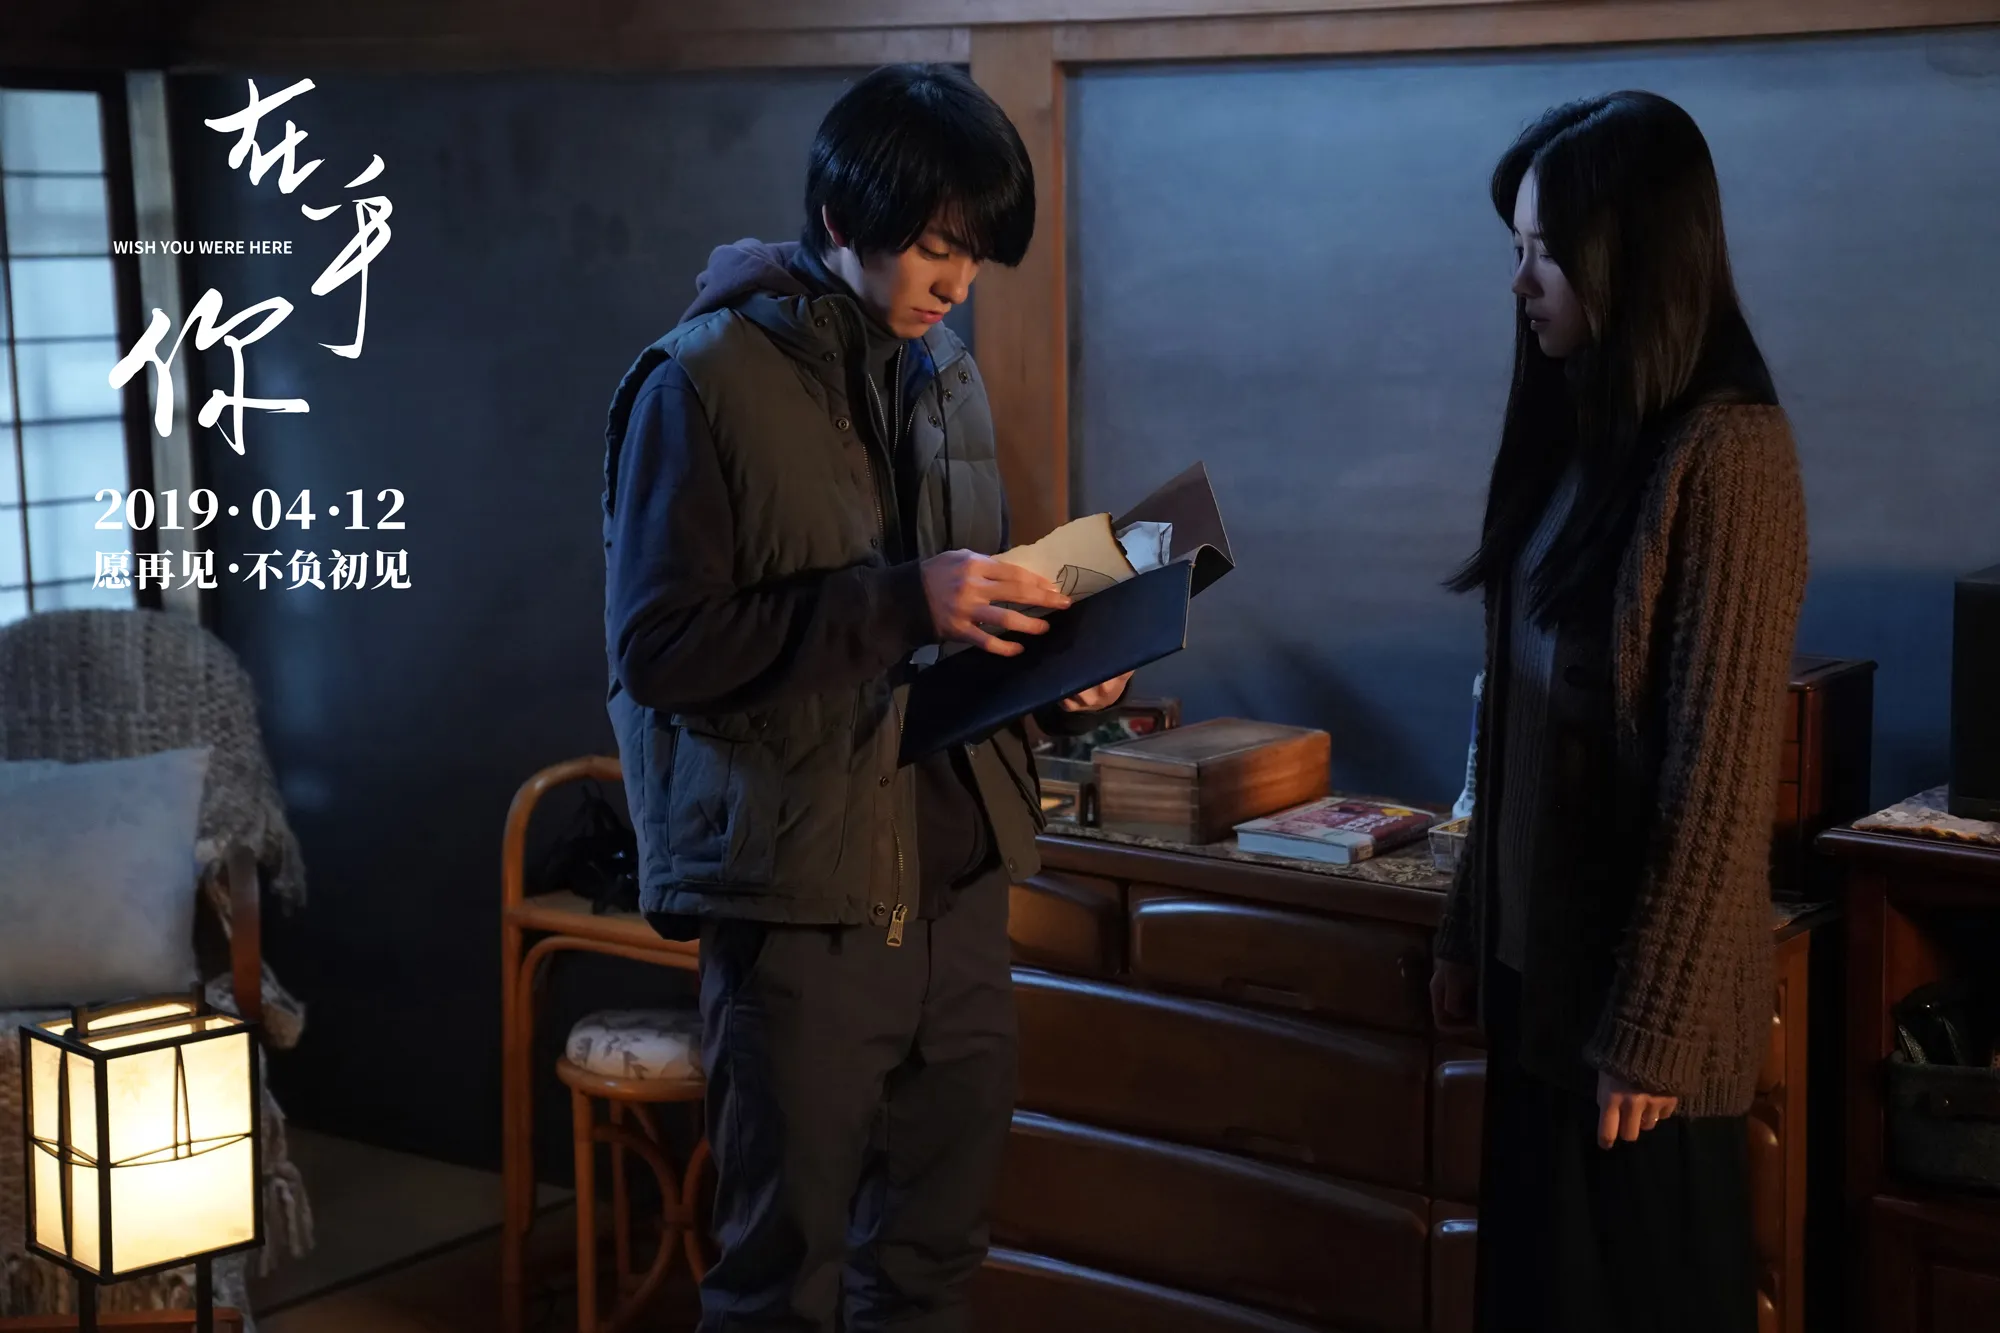  Gōki Maeda (actor) 与 Lu Yang foreign 似要共同面对烦恼.jpg